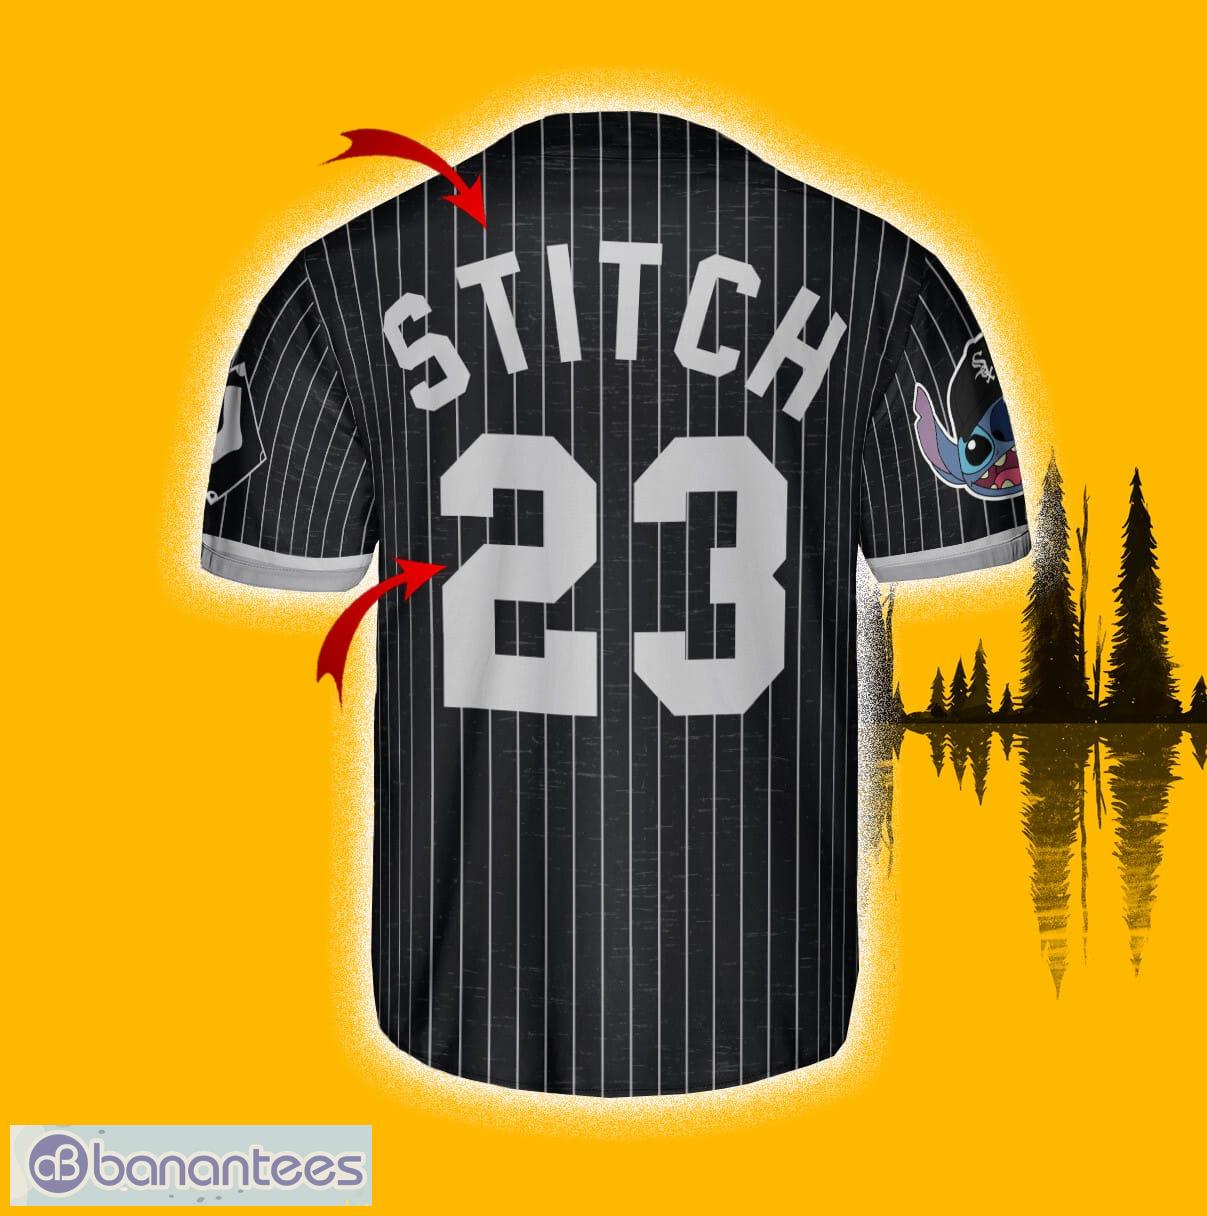 Chicago White Sox Stitch CUSTOM Baseball Jersey 